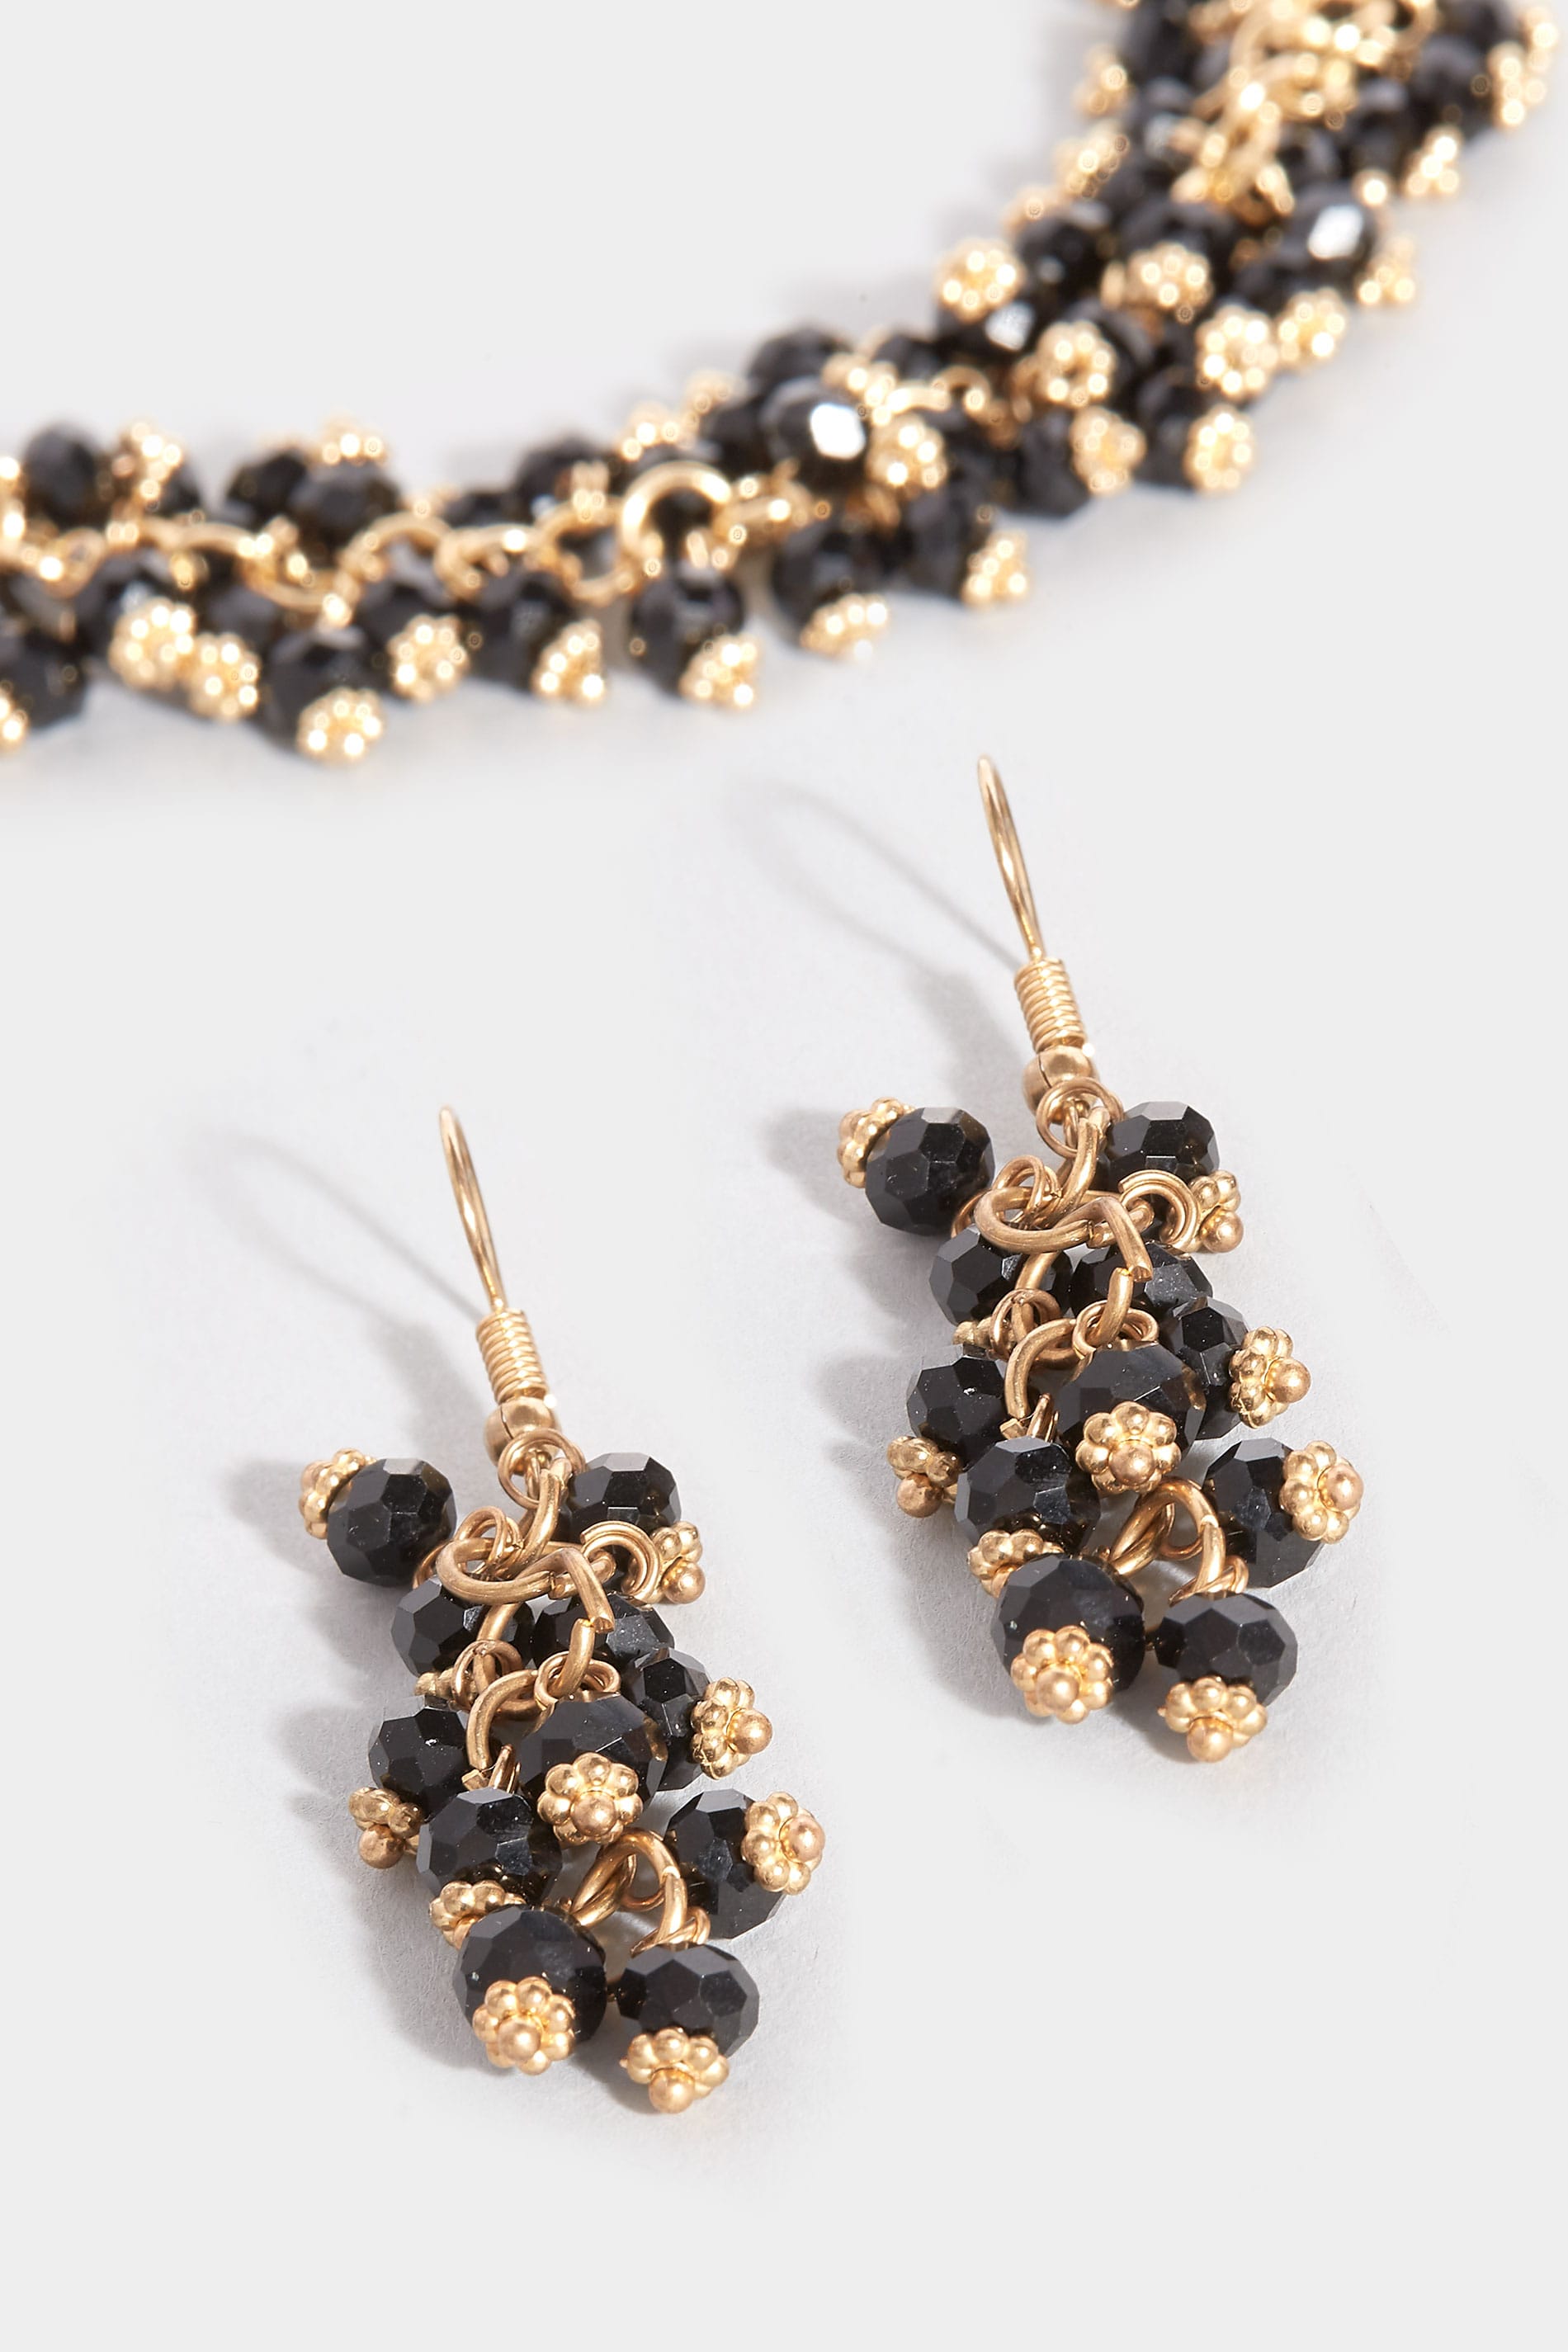 Gold & Black Beaded Necklace & Earrings Set